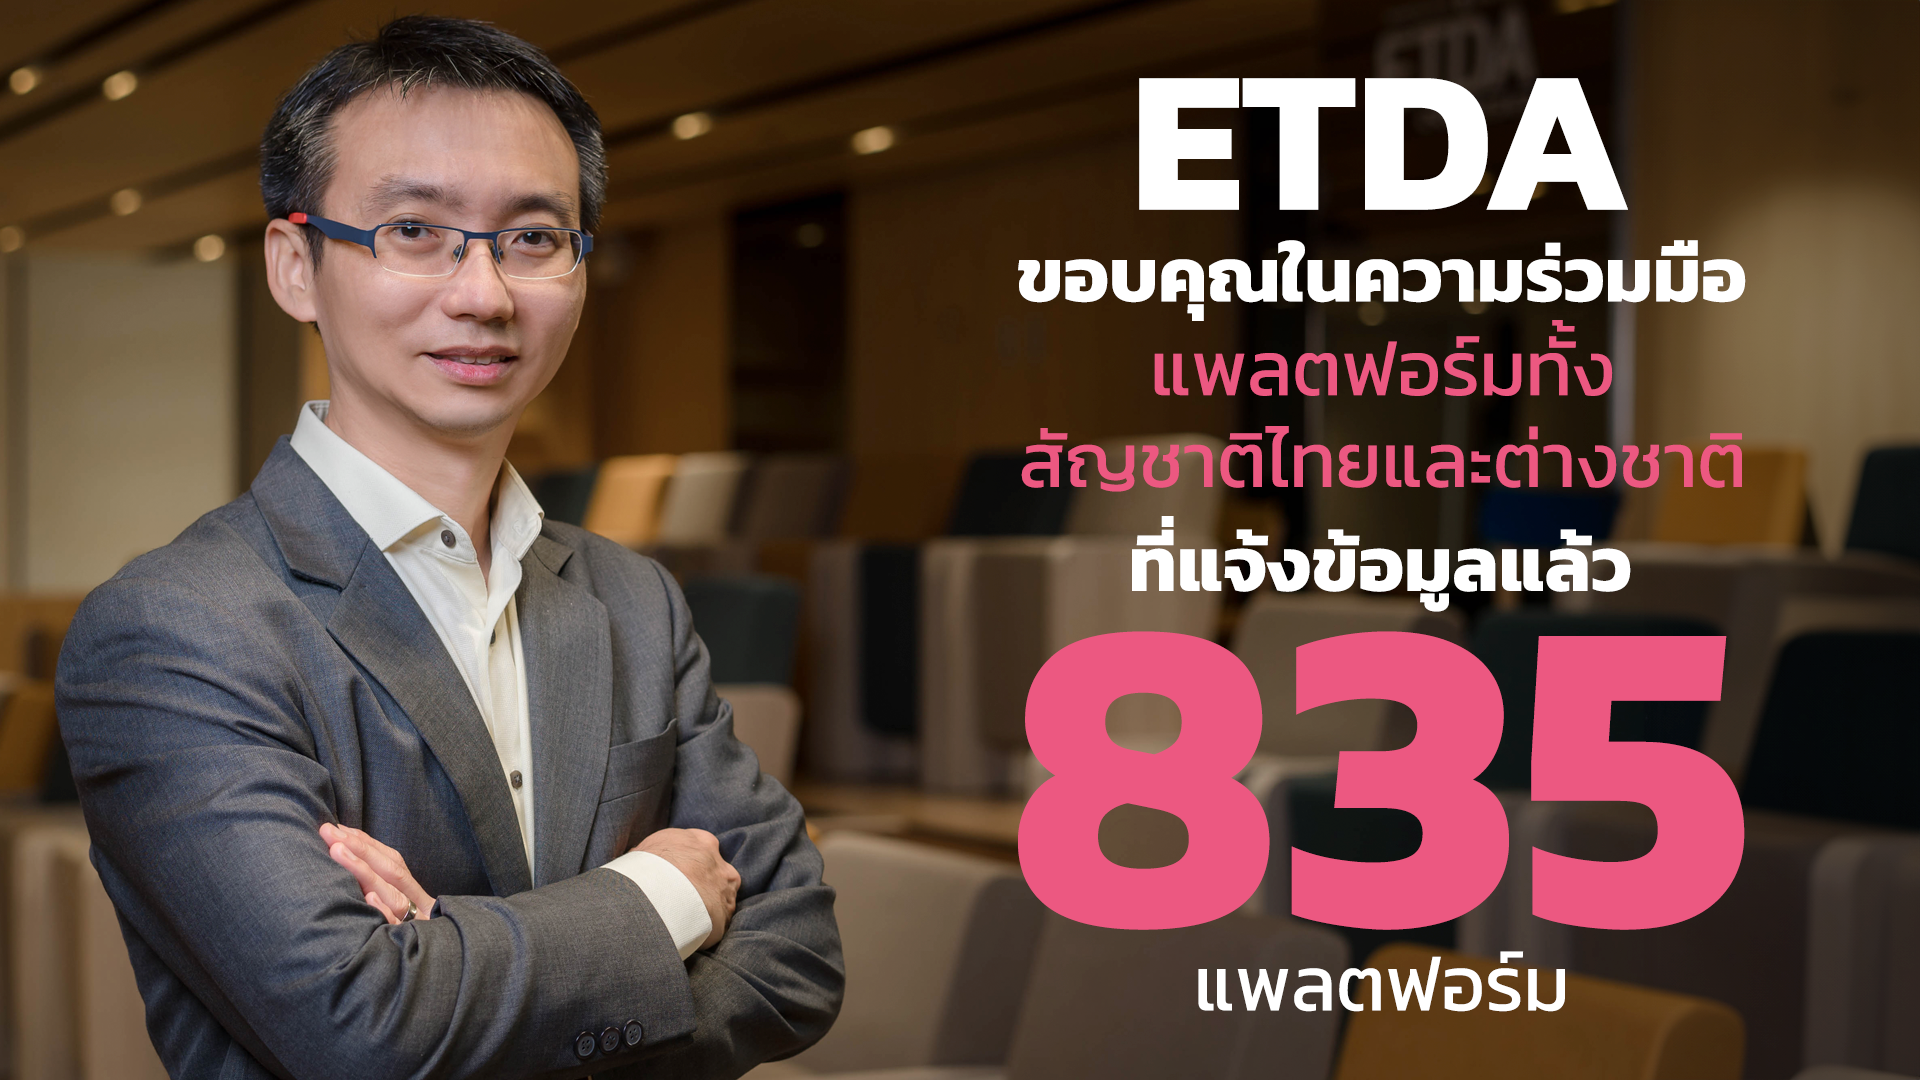 ETDA ขอบคุณในความร่วมมือ ทุกแพลตฟอร์มทั้งสัญชาติไทยและต่างประเทศ  แจ้งข้อมูลตามกฎหมาย DPS แล้ว 835 แ